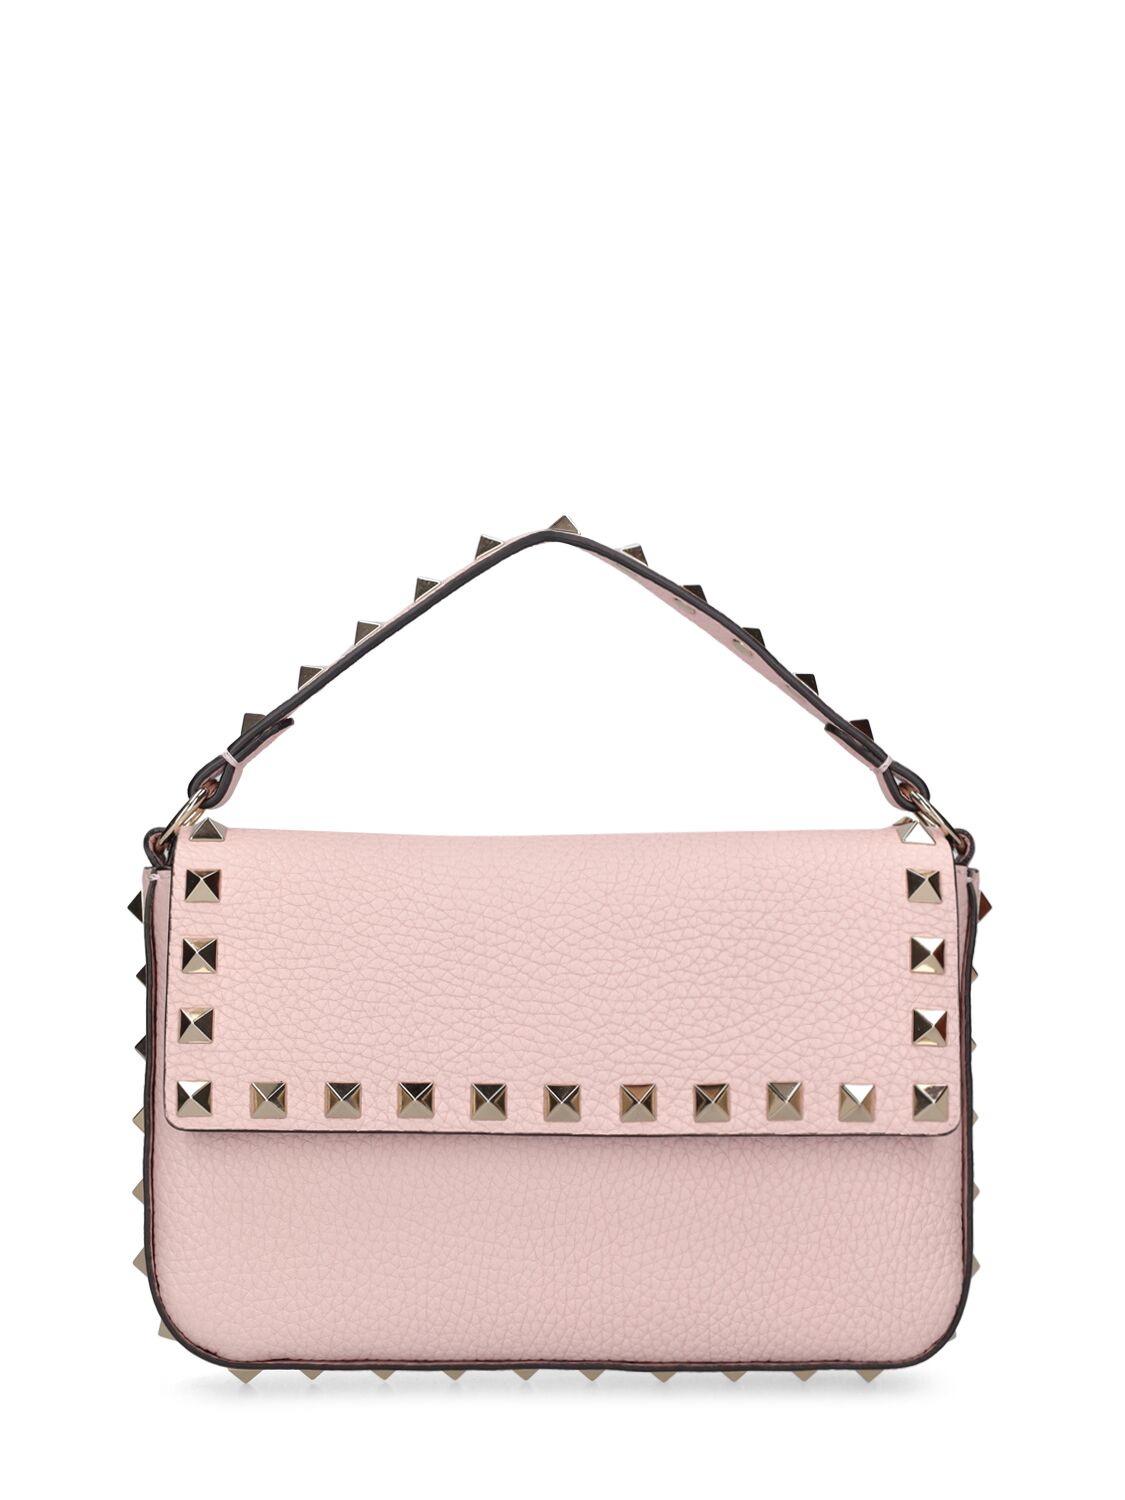 Valentino Garavani Small Rockstud Leather Top Handle Bag In Pink